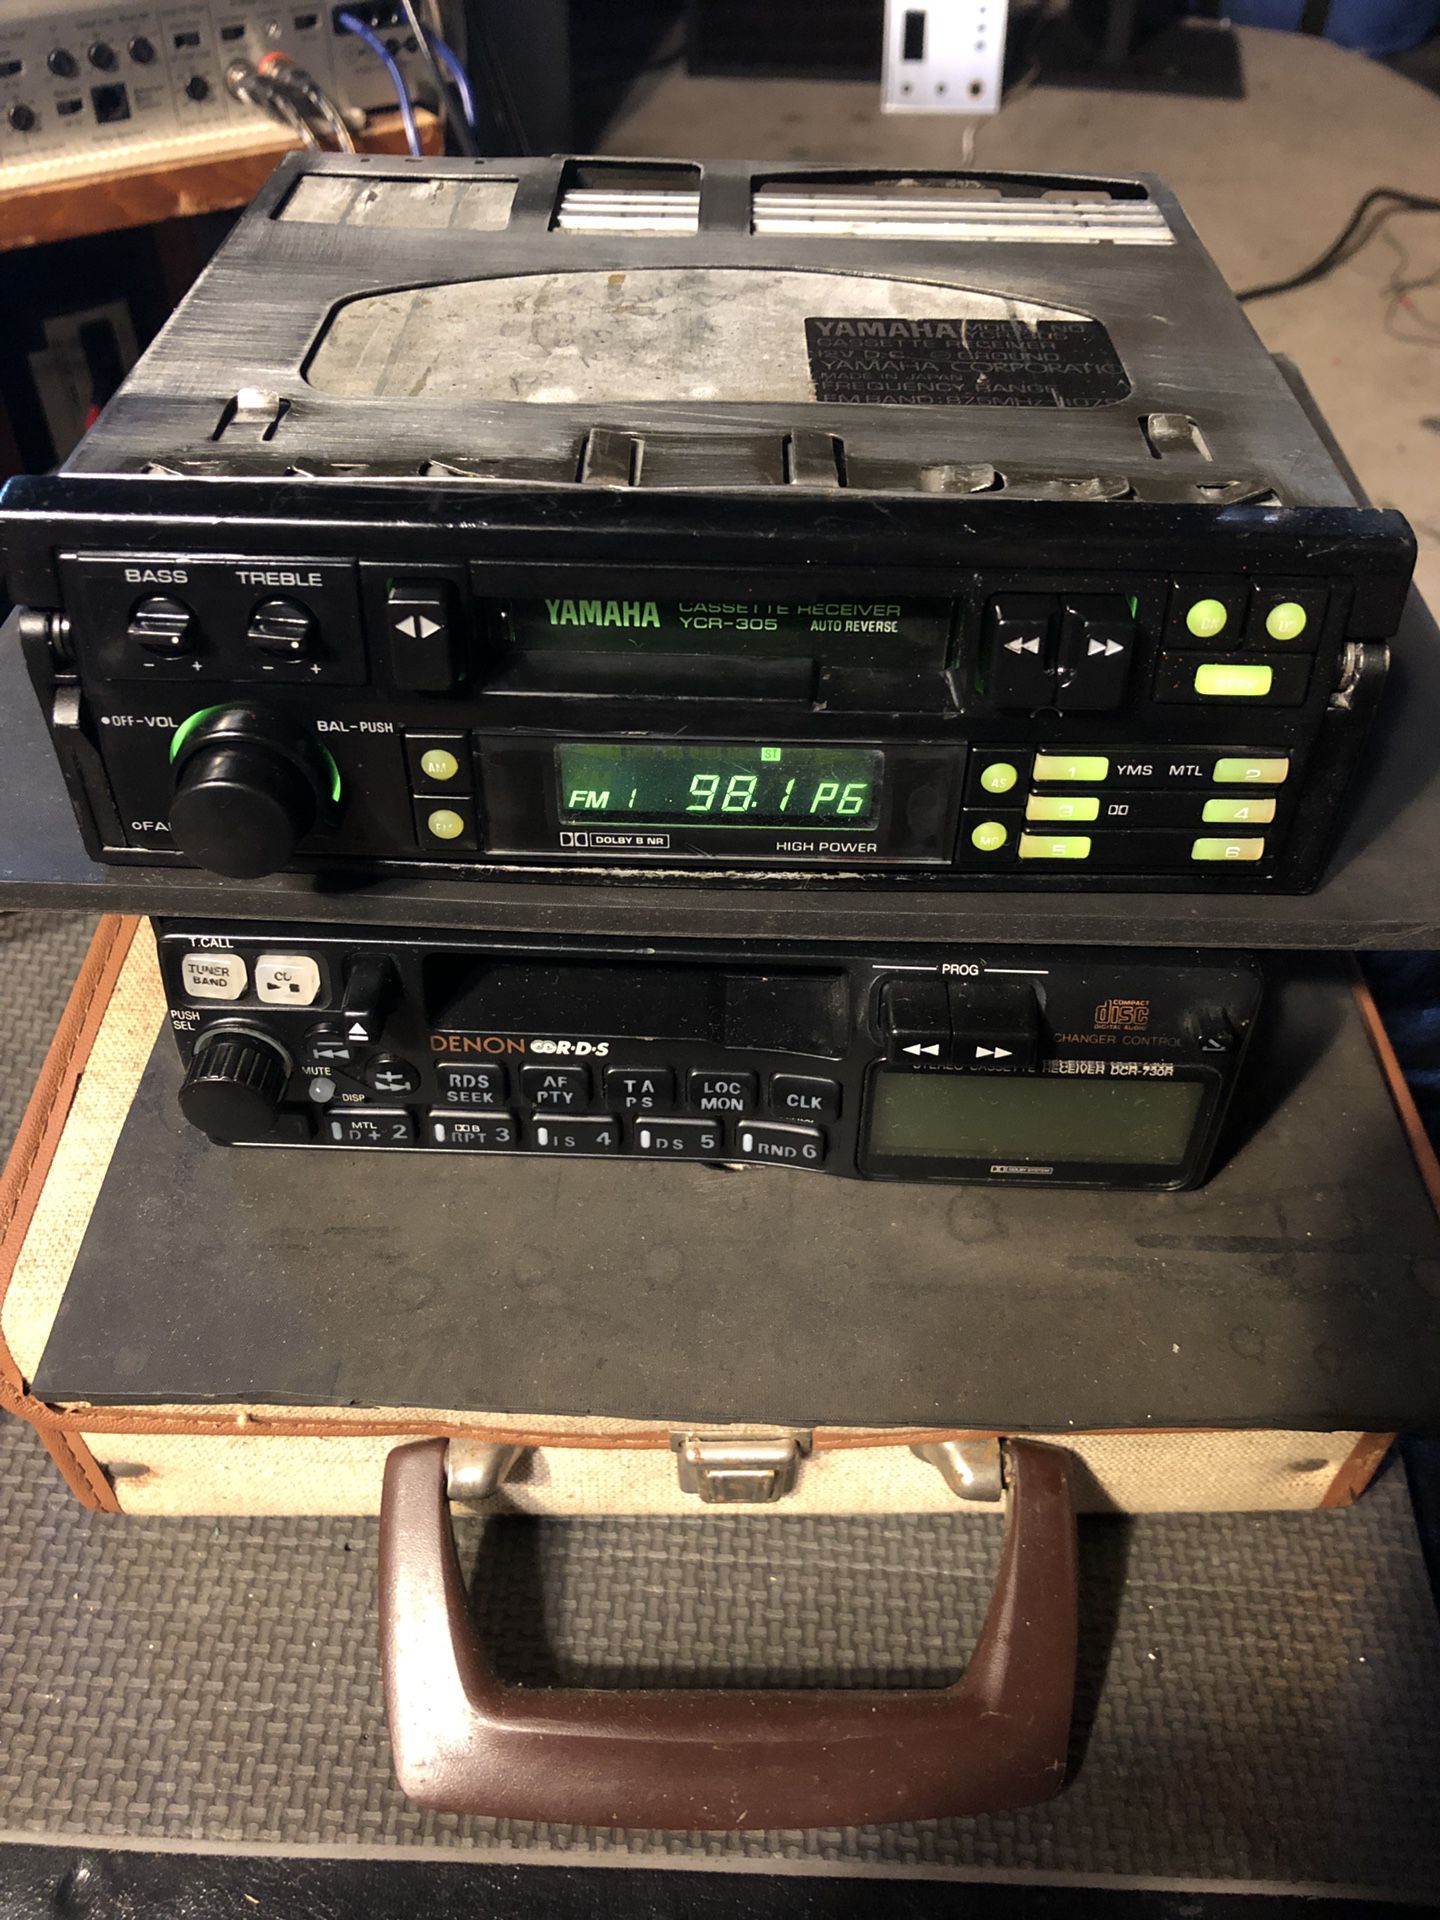 Yamaha ycr-305 cassette deck head unit